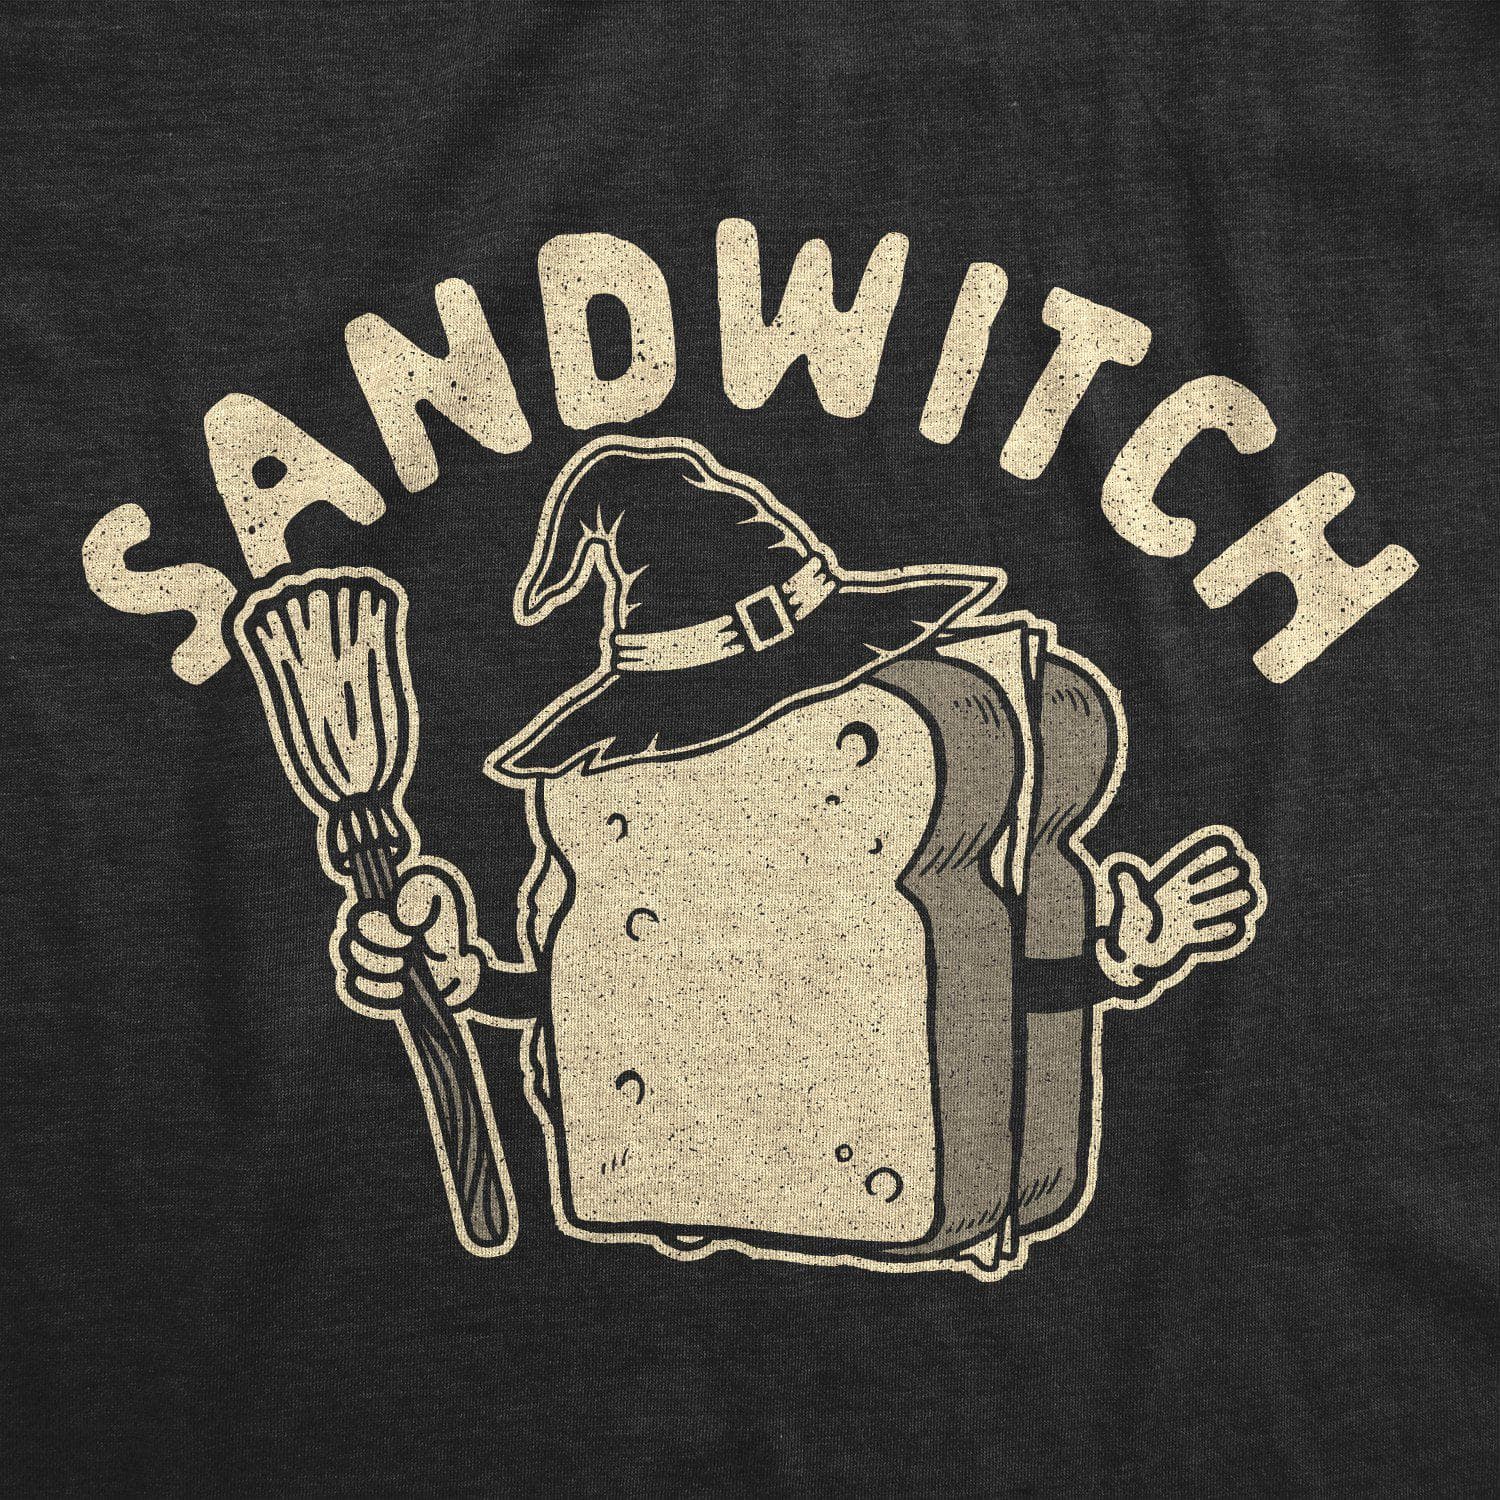 Sandwitch Women's Tshirt - Crazy Dog T-Shirts